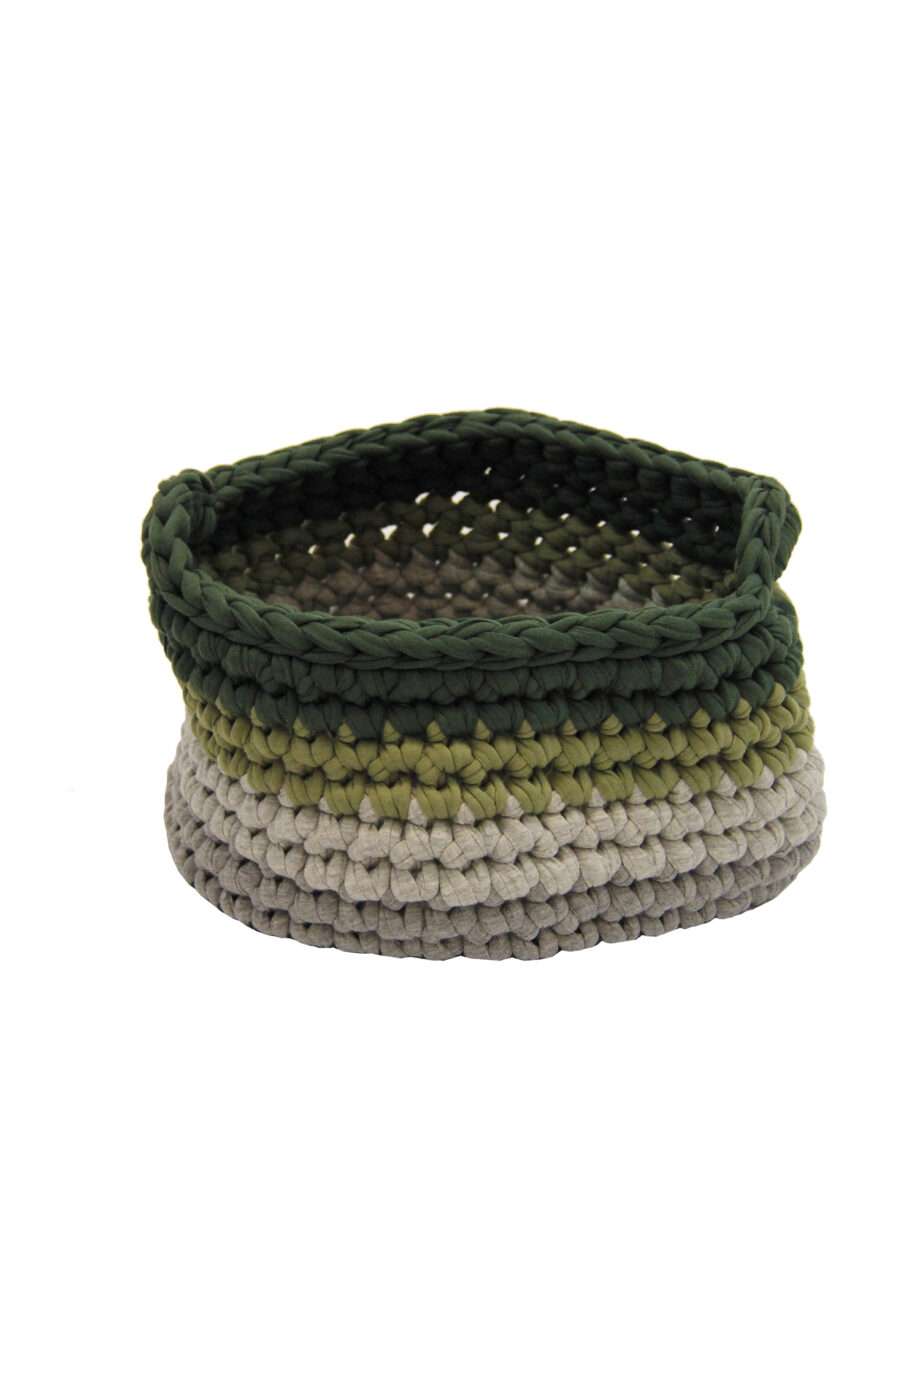 groovy olive green crochet cotton basket large